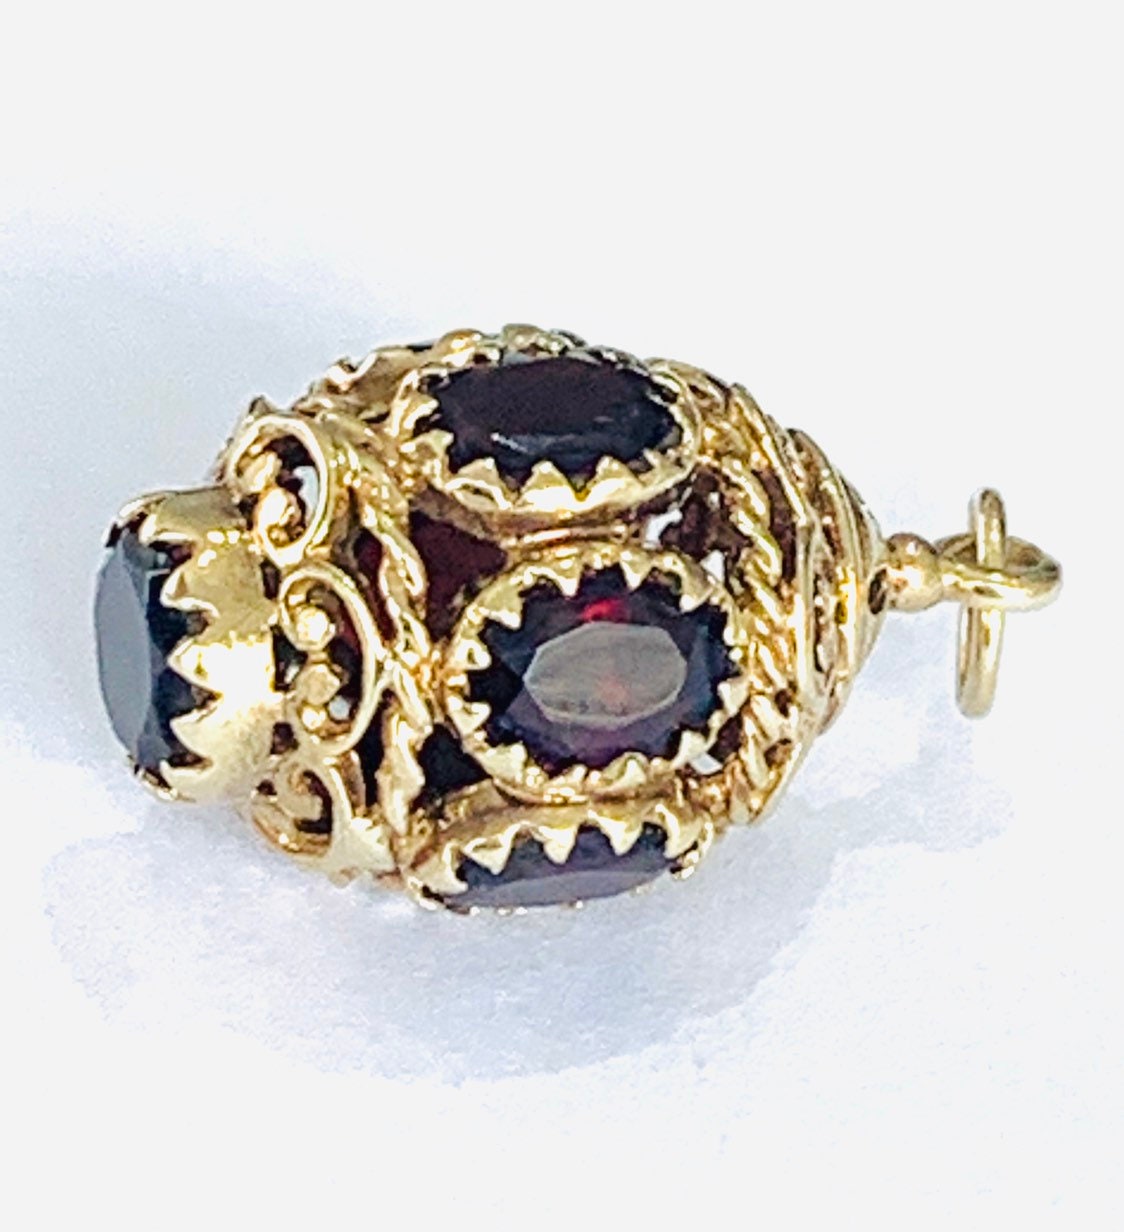 Stunning heavy vintage 9ct gold Garnet pendant - fully hallmarked